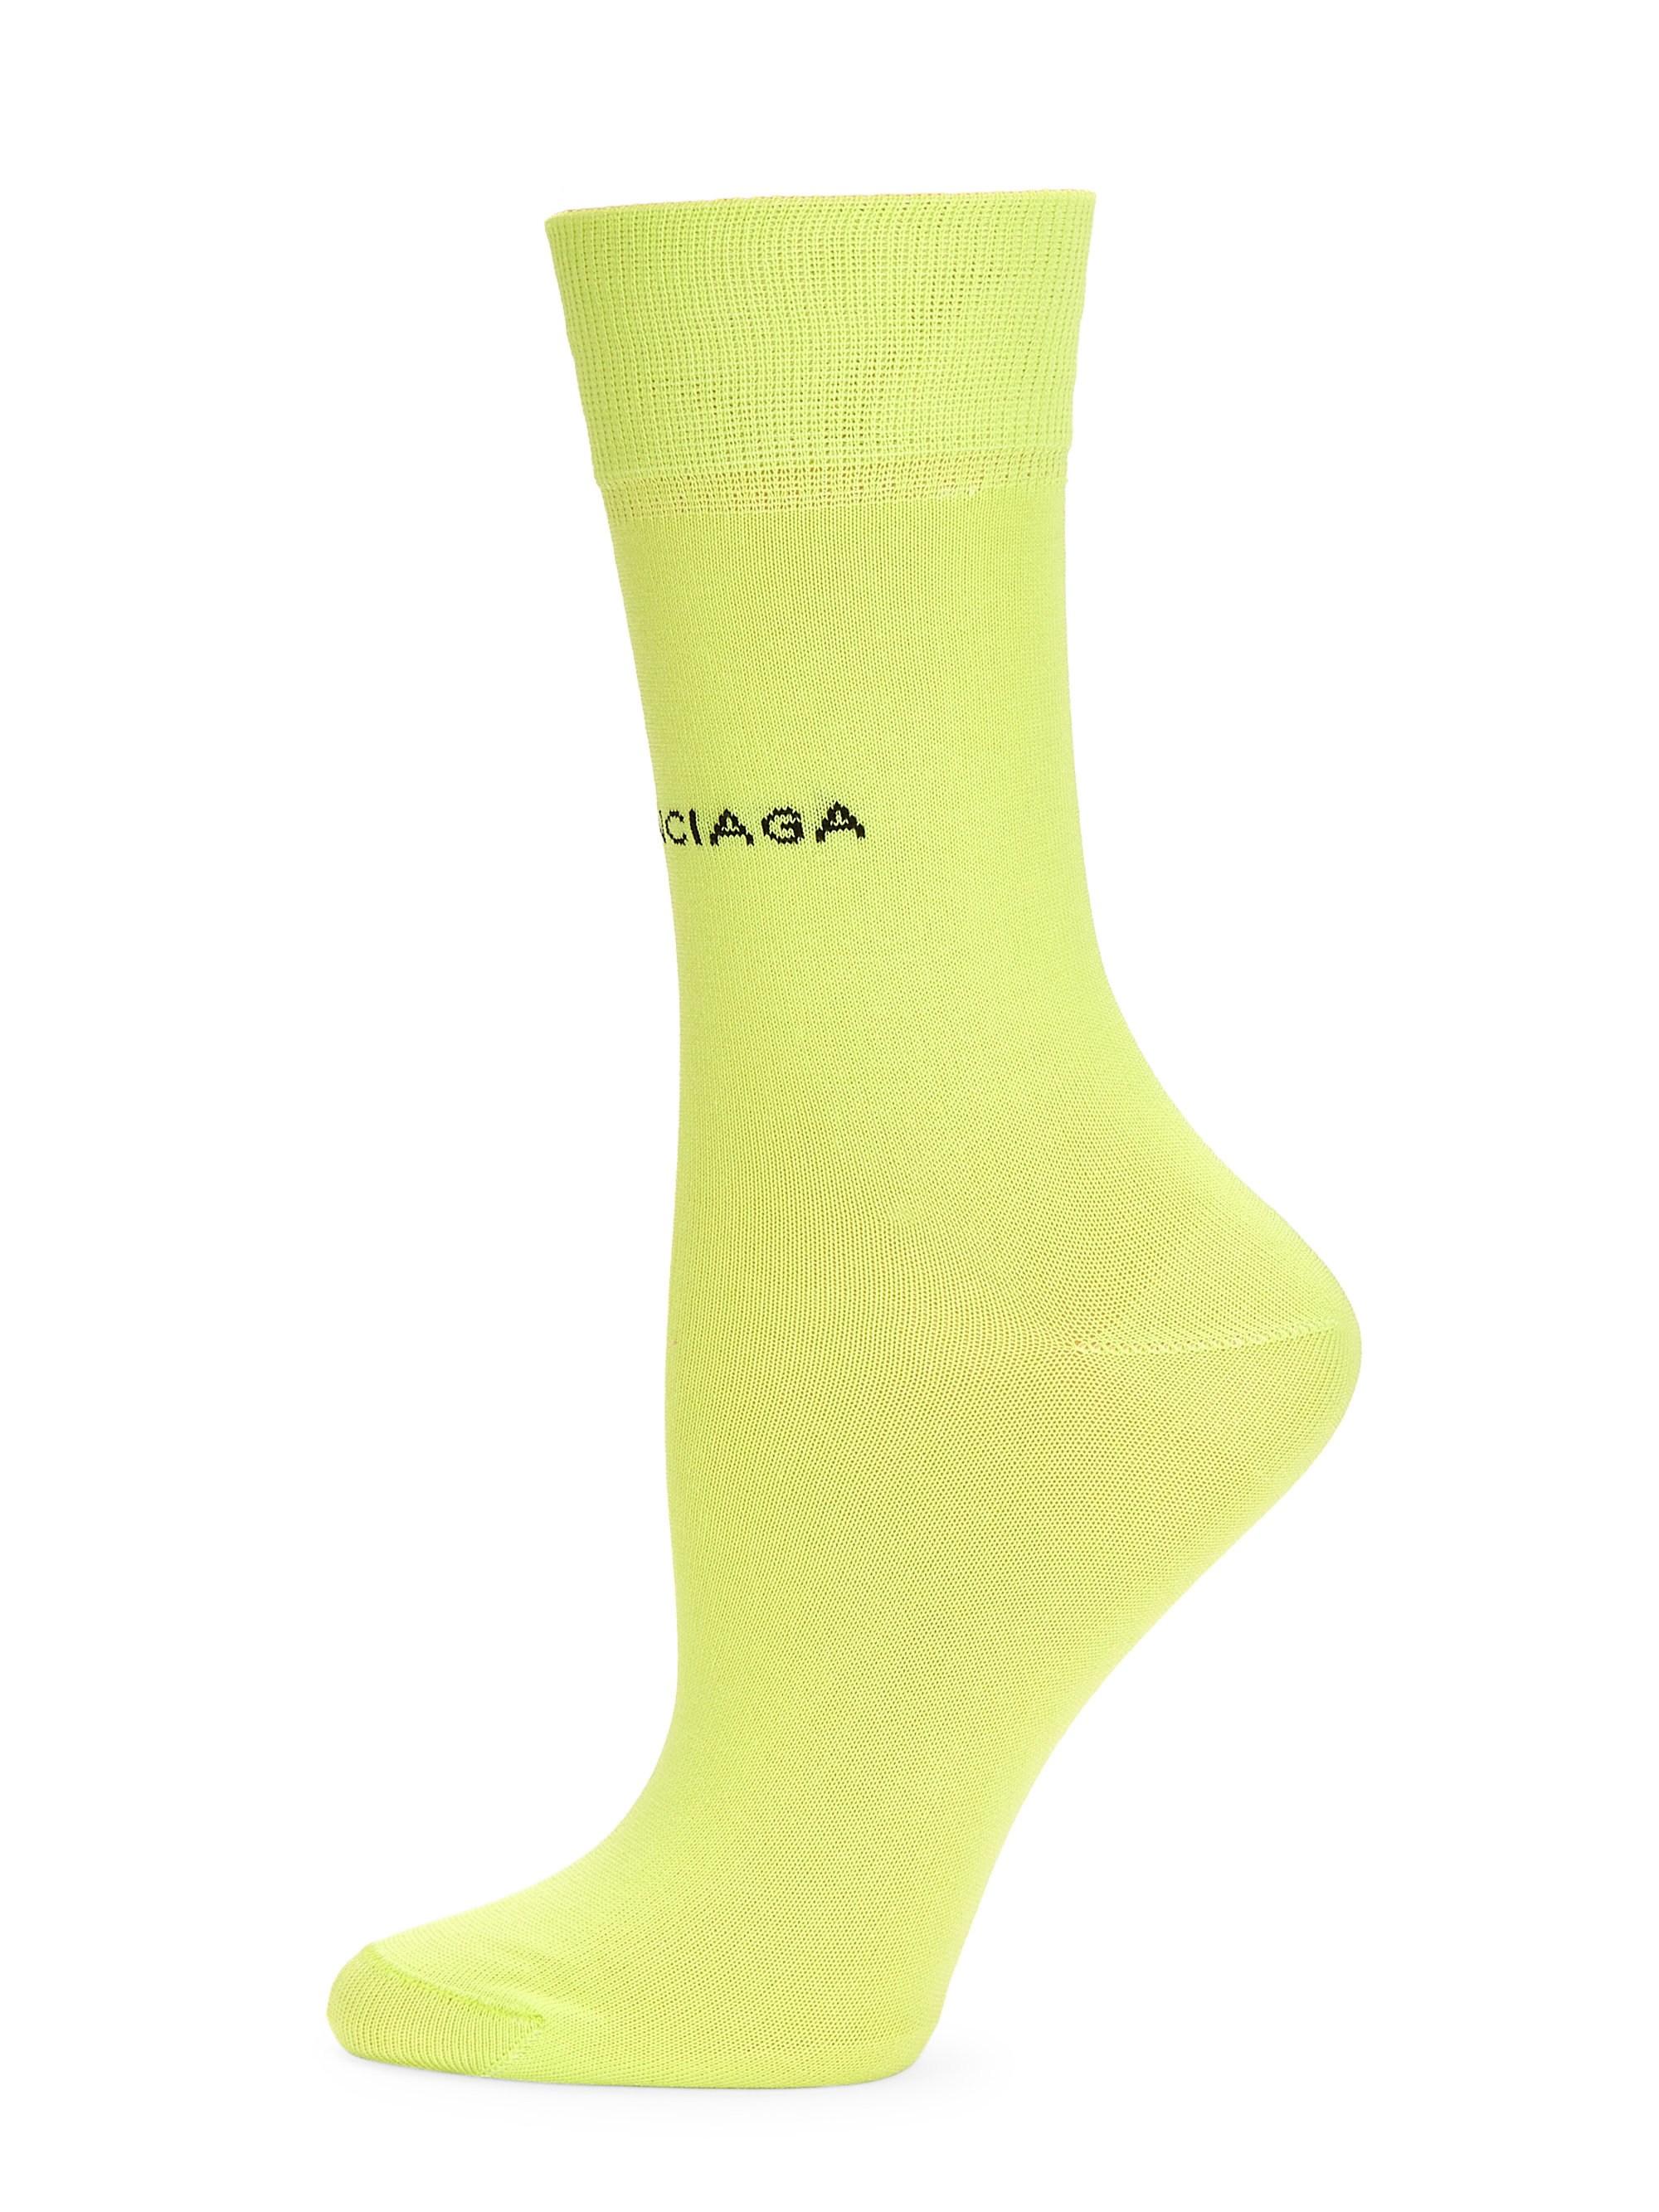 balenciaga sock yellow